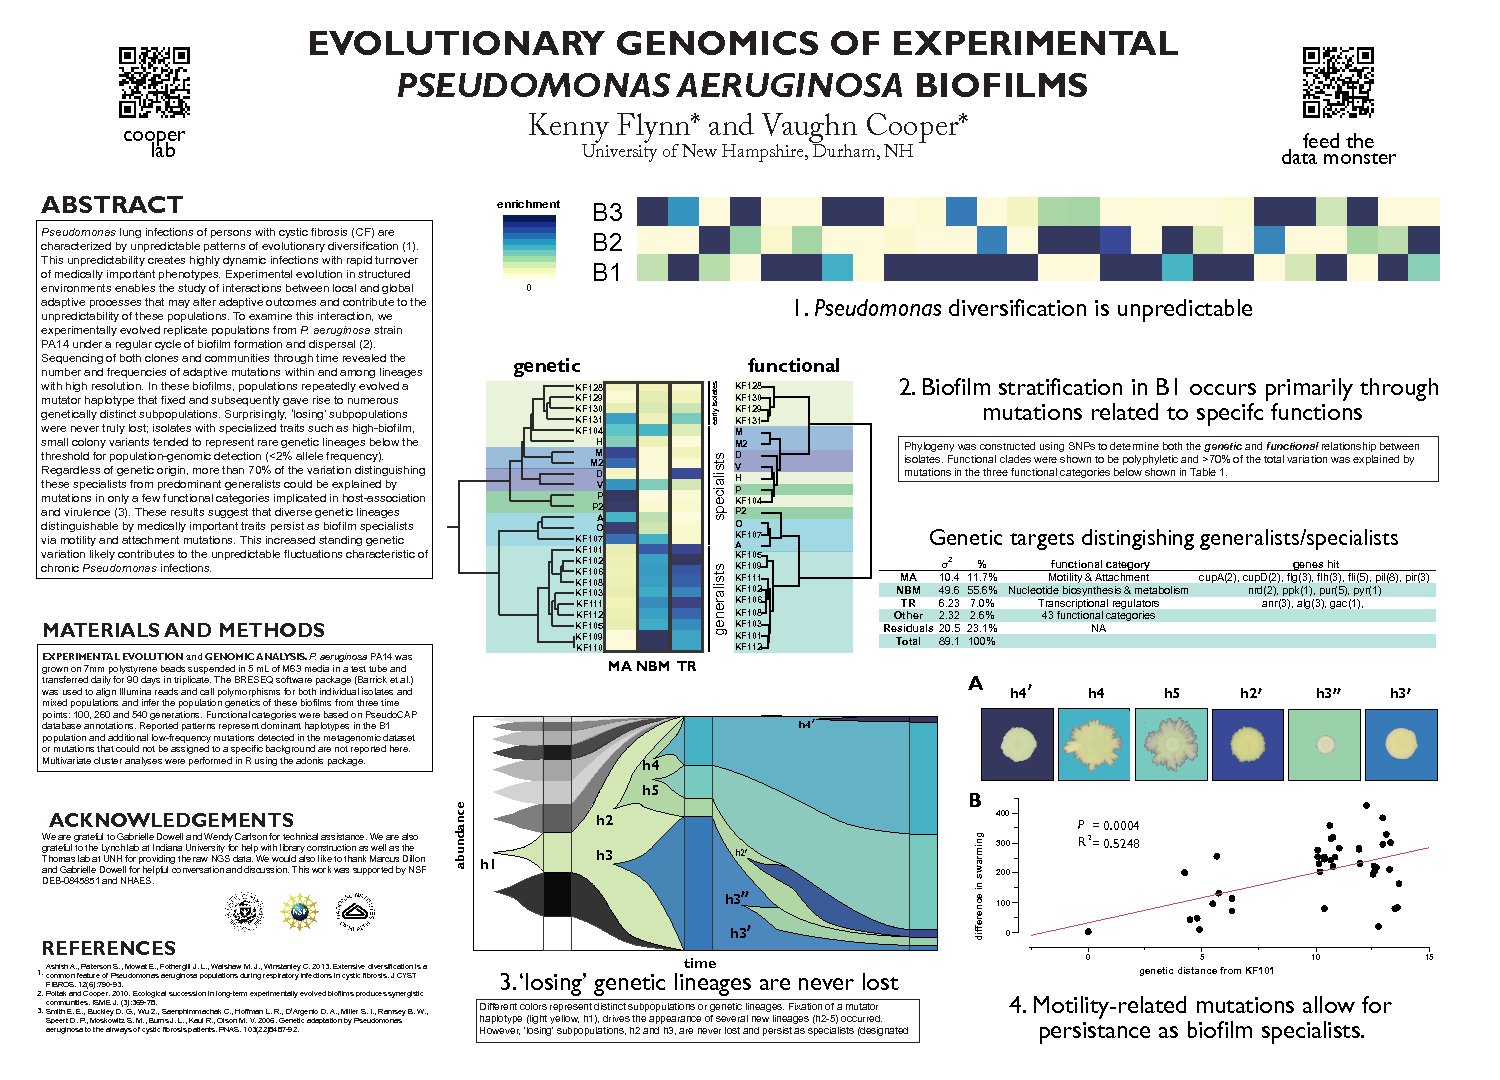 Evolutionary Genomics Of Experimental Pseudomonas Aeruginosa Biofilms by kmflynn5